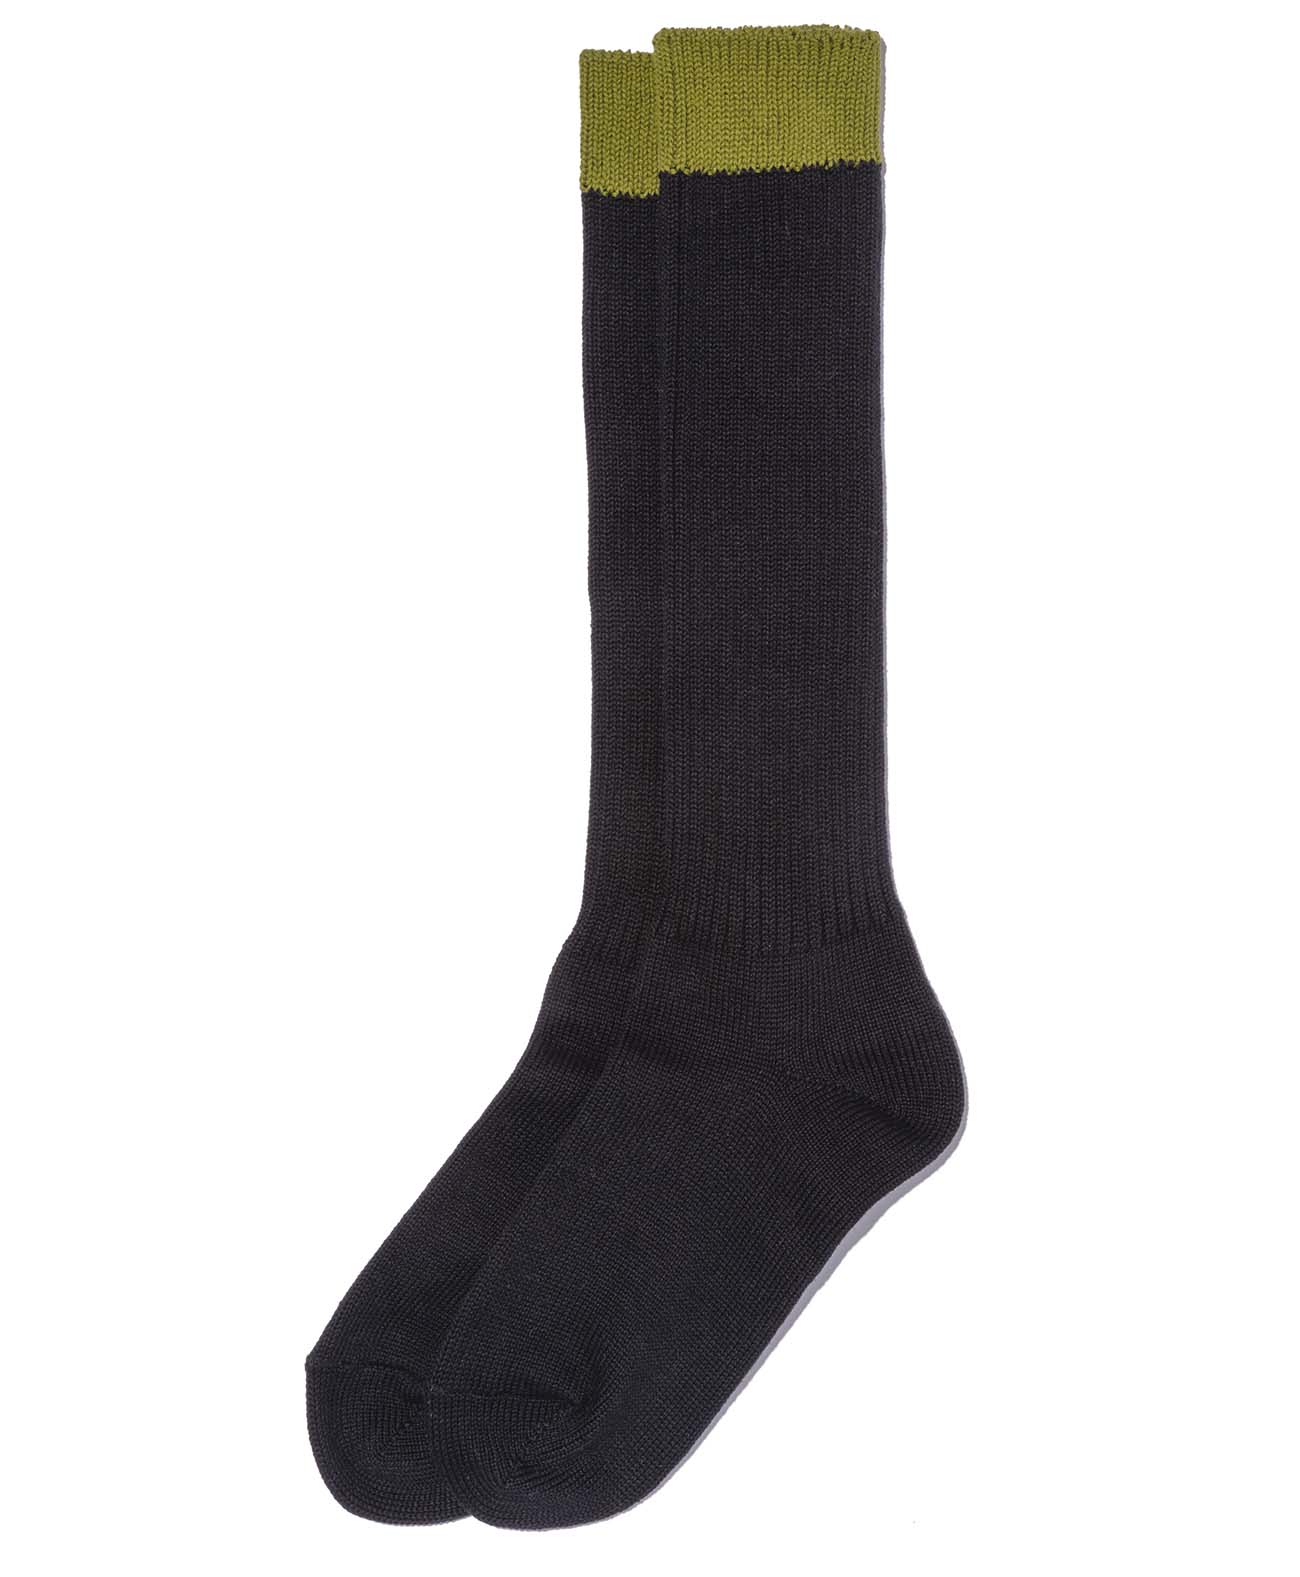 Boots Socks / Black / Khaki